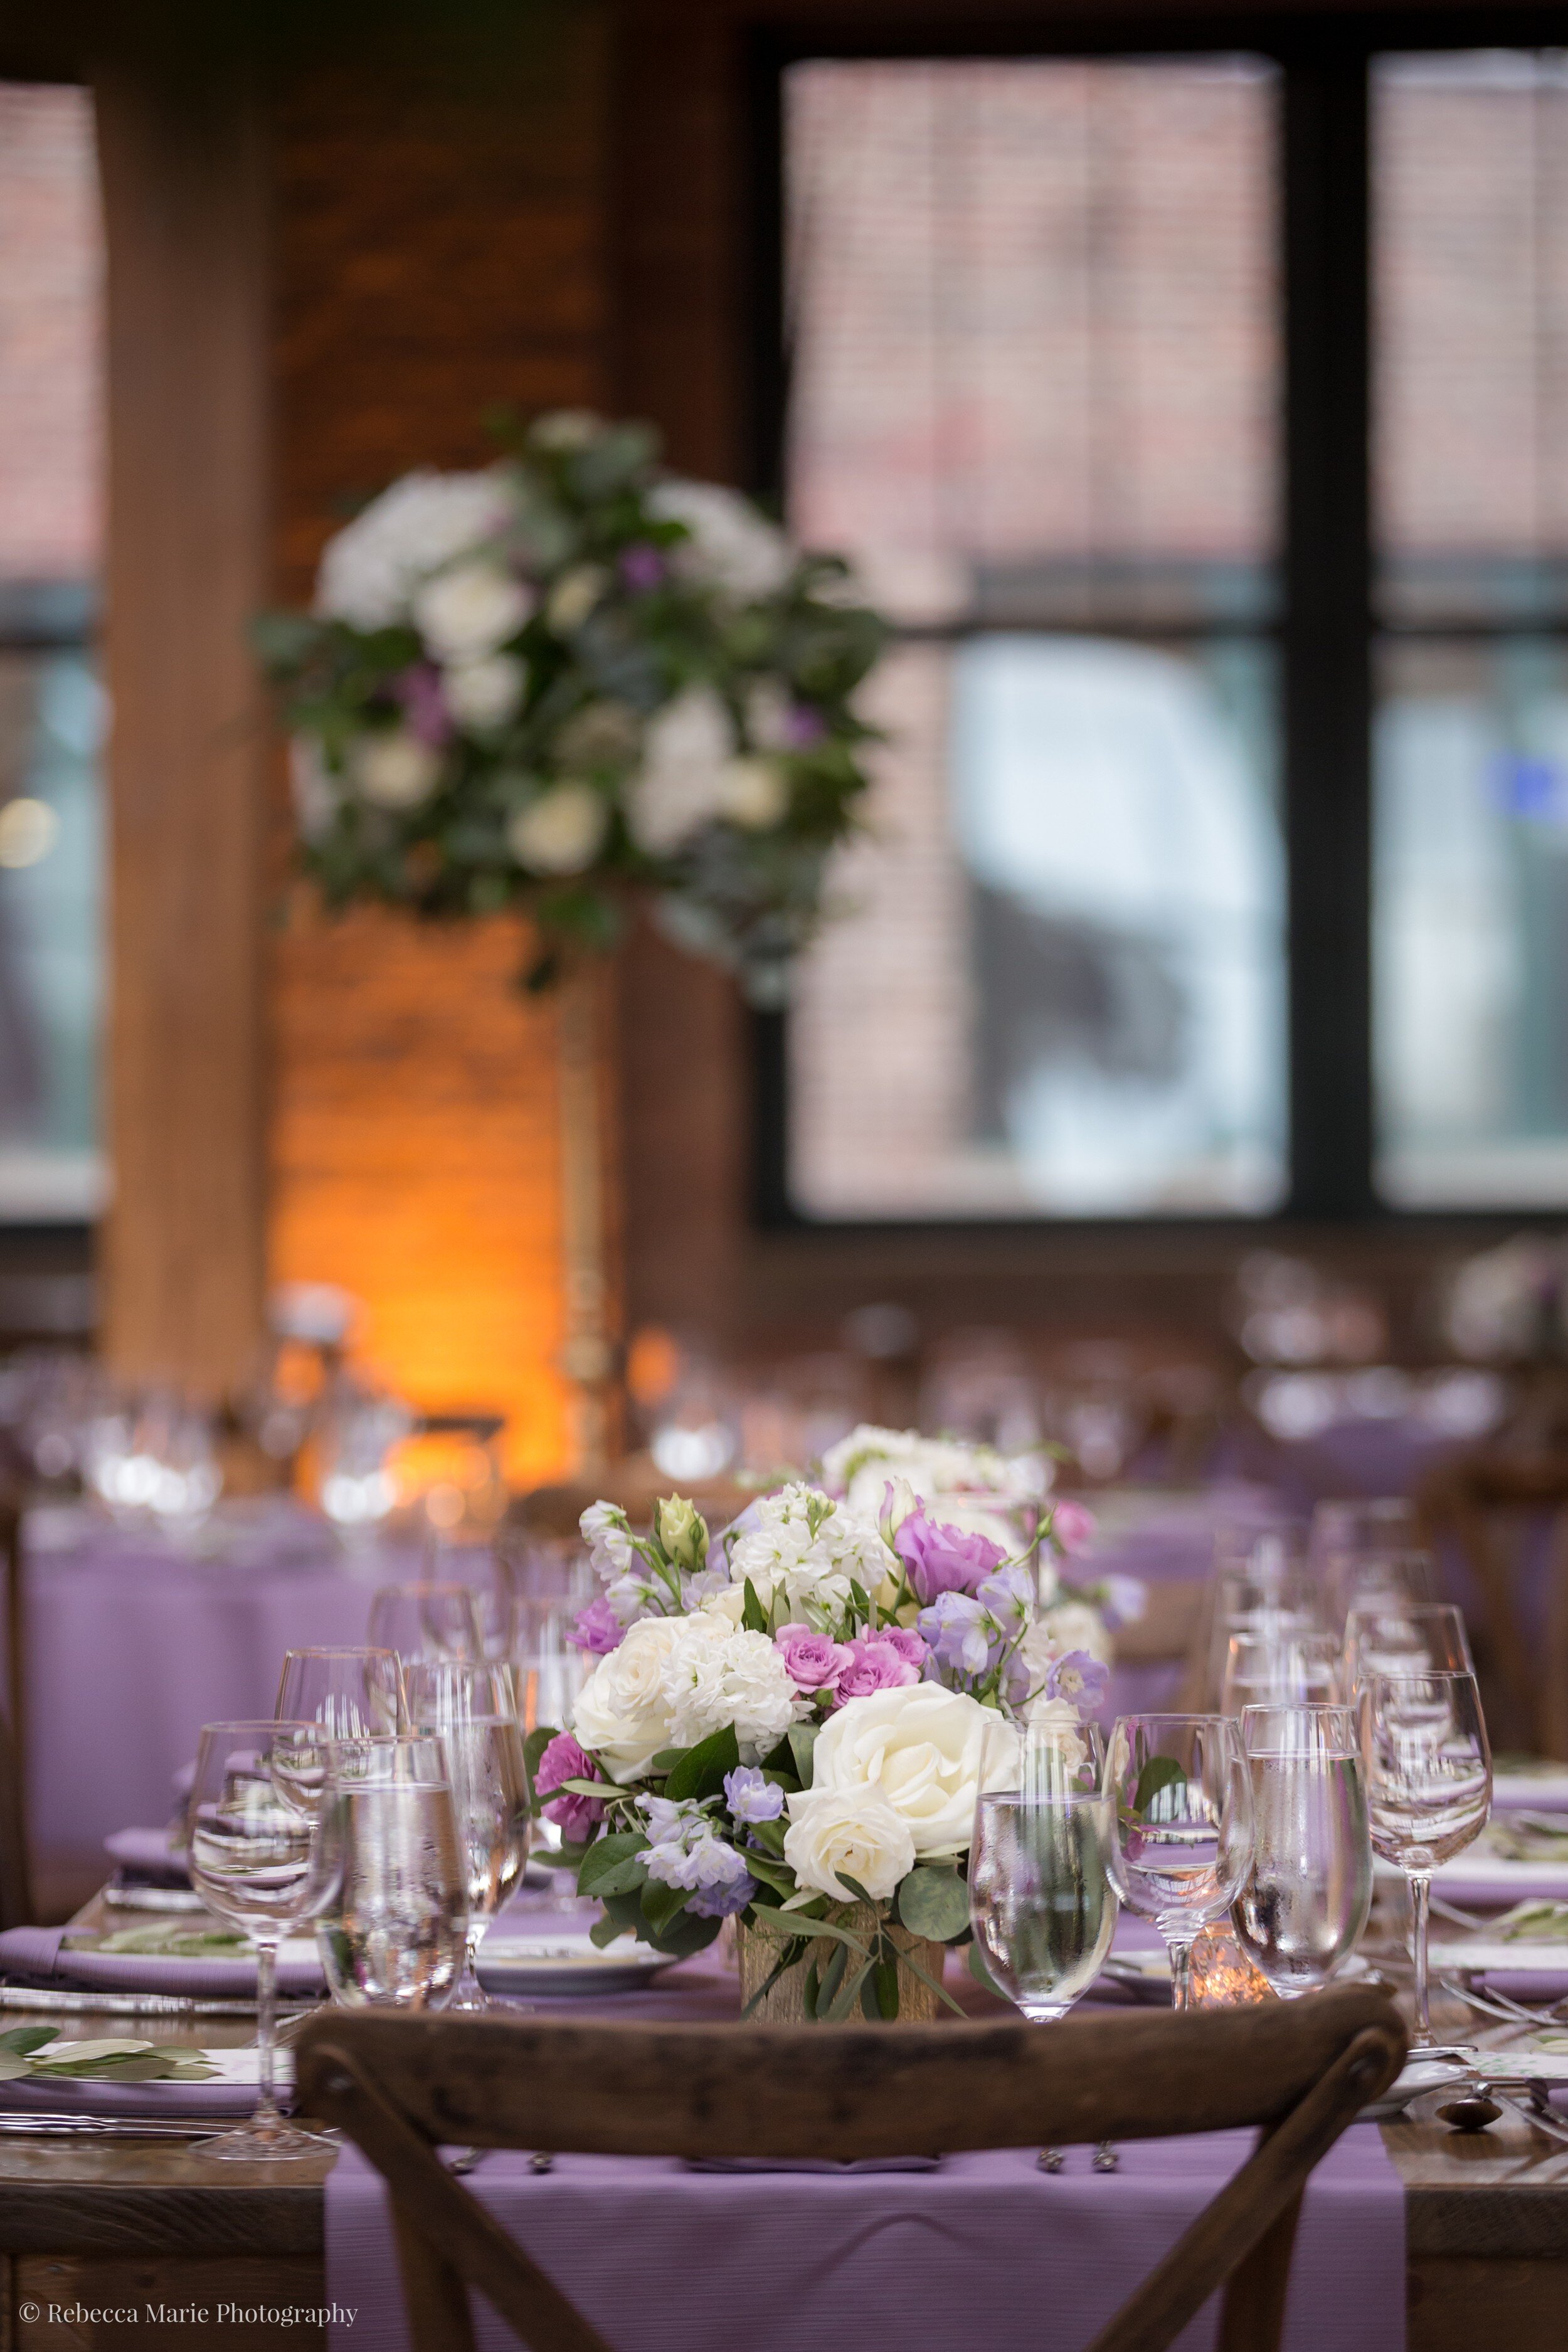 Wedding farm tables with purple flowers